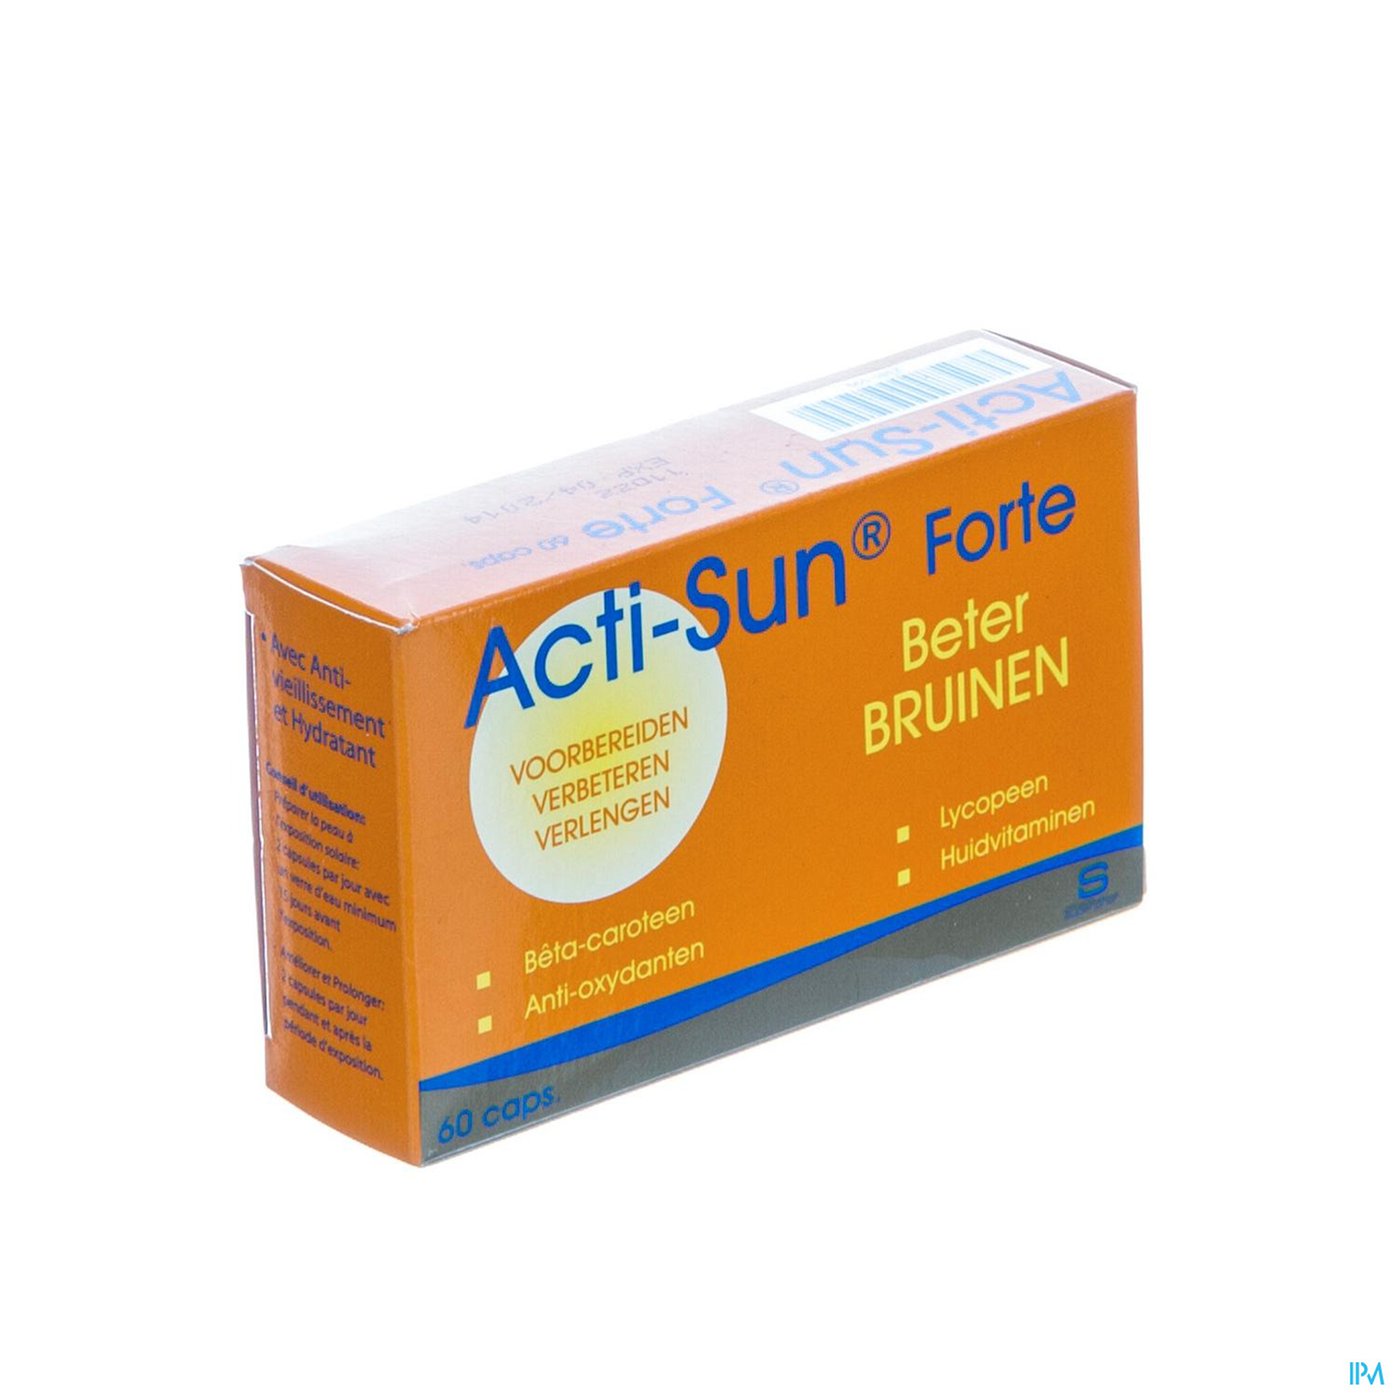 Acti-sun Forte Caps 60 packshot